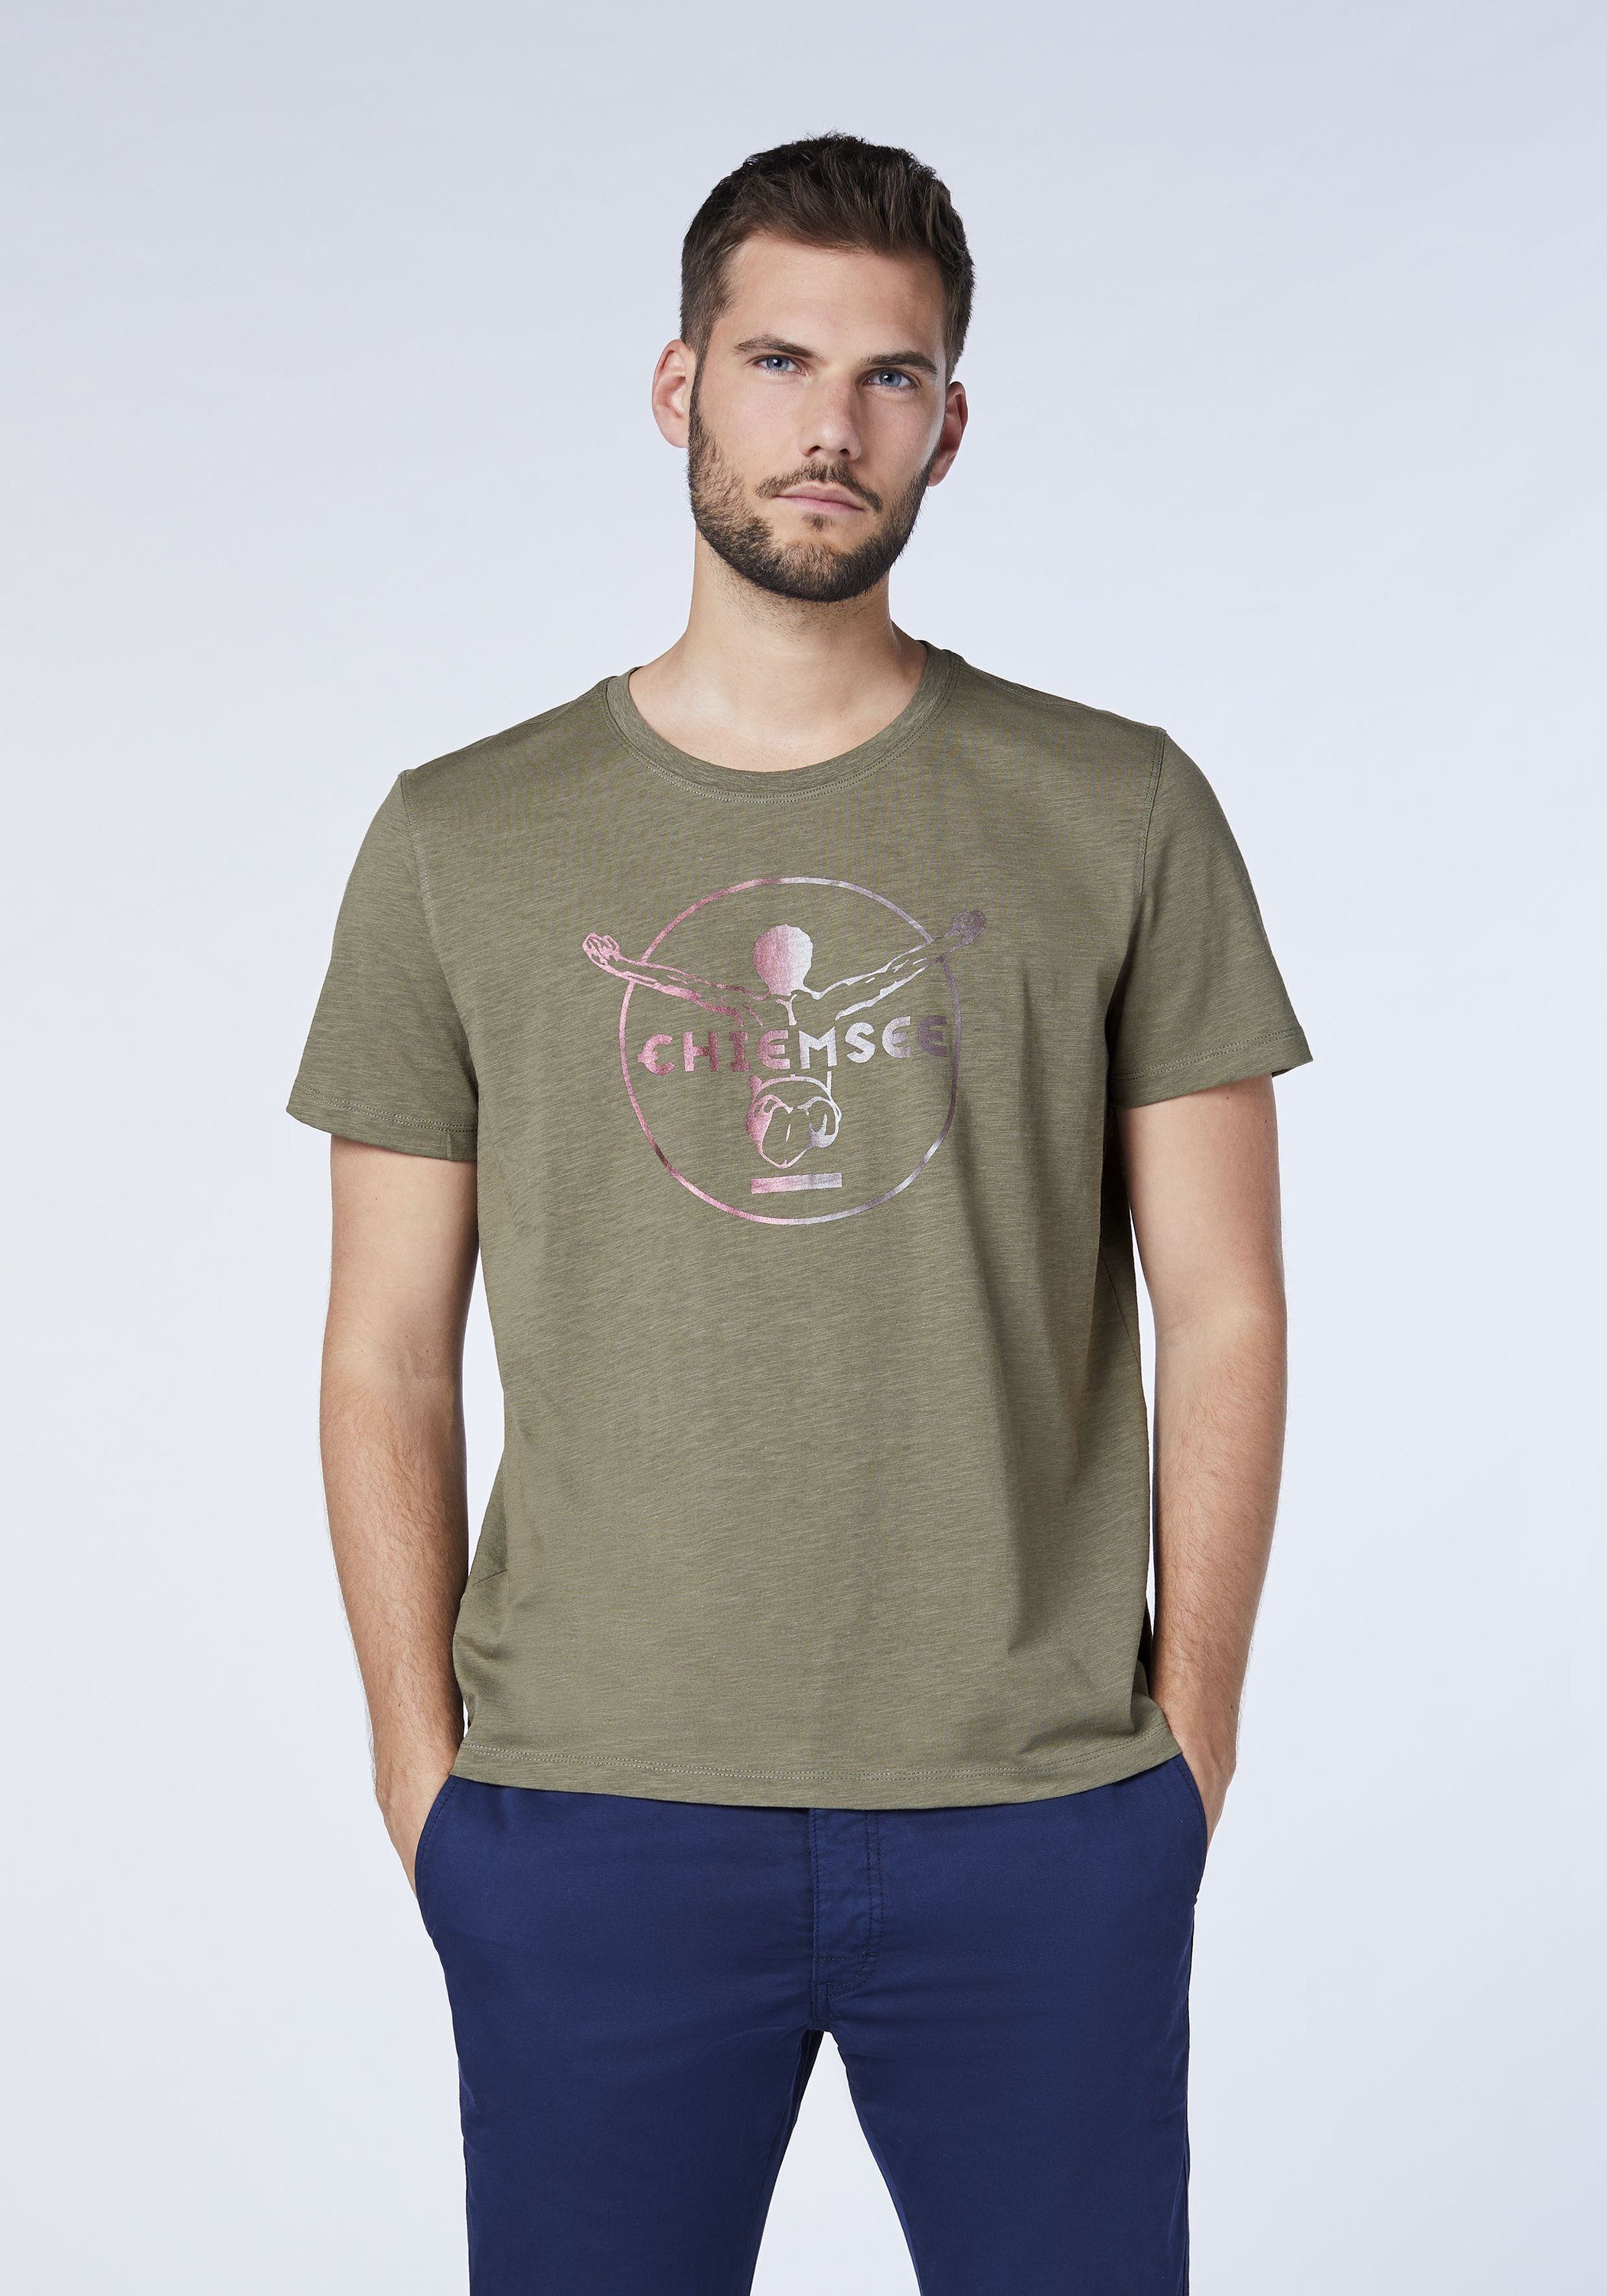 Chiemsee Print-Shirt T-Shirt mit gedrucktem Dusty Olive Label-Symbol 1